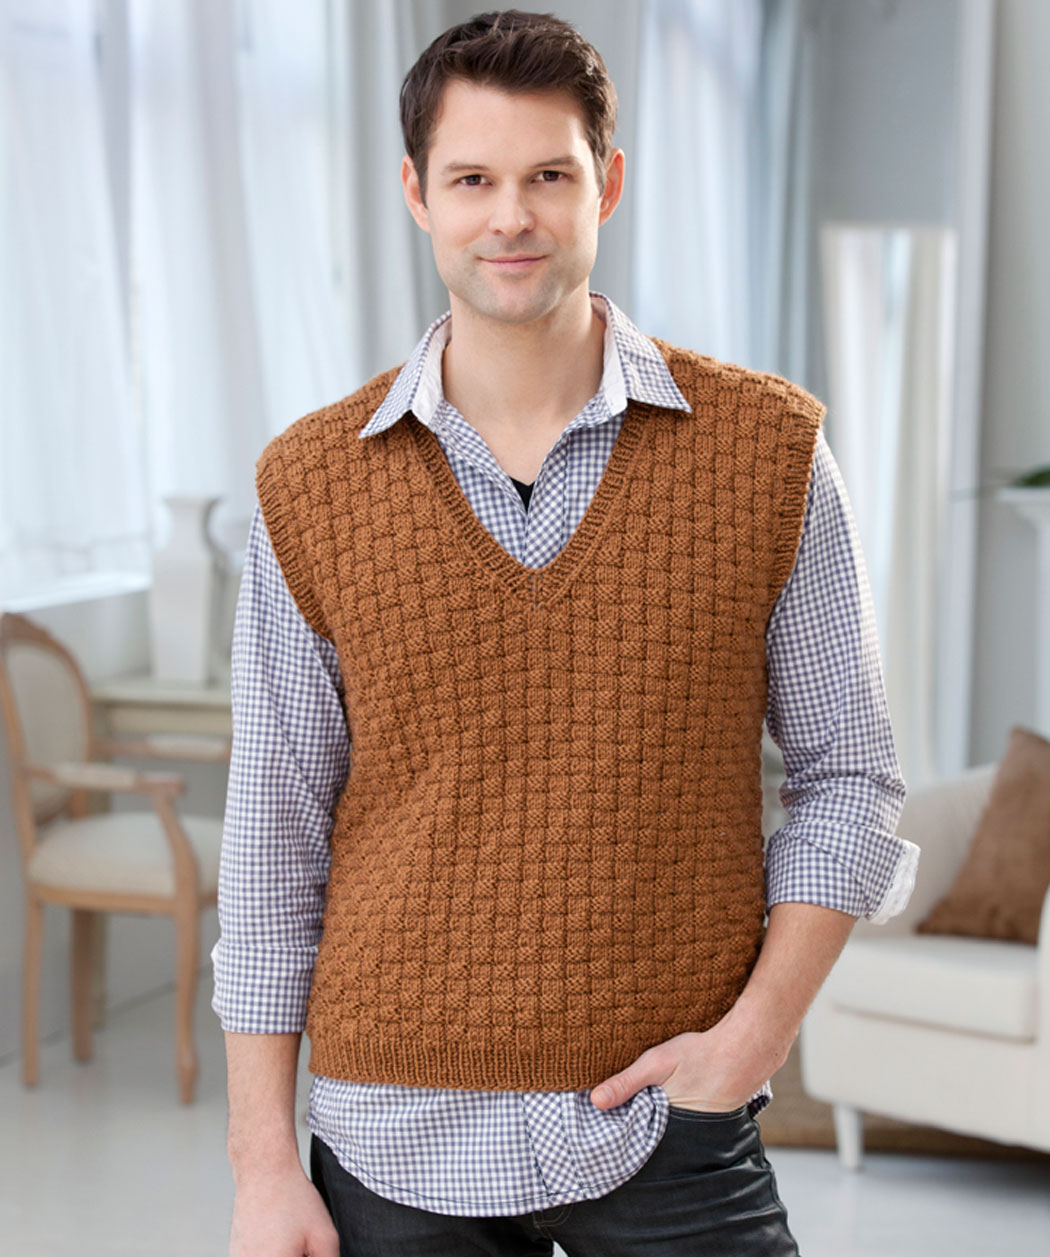 Crochet Sweater Vest Pattern Free 36 Knit And Crochet Patterns For Men Red Heart